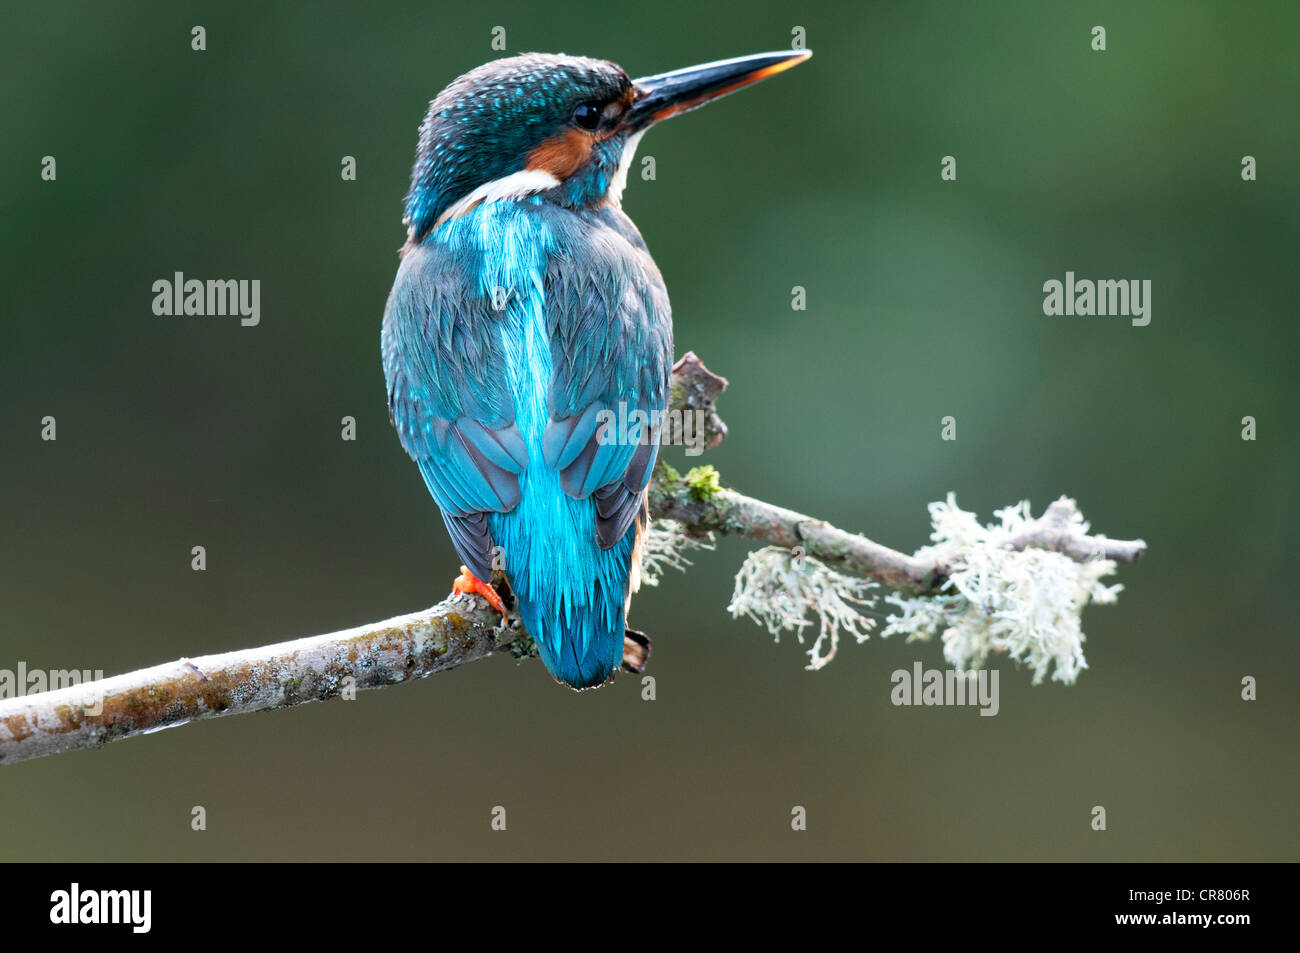 Kingfisher hembra de pie sobre una ramita mirando a la derecha Foto de stock